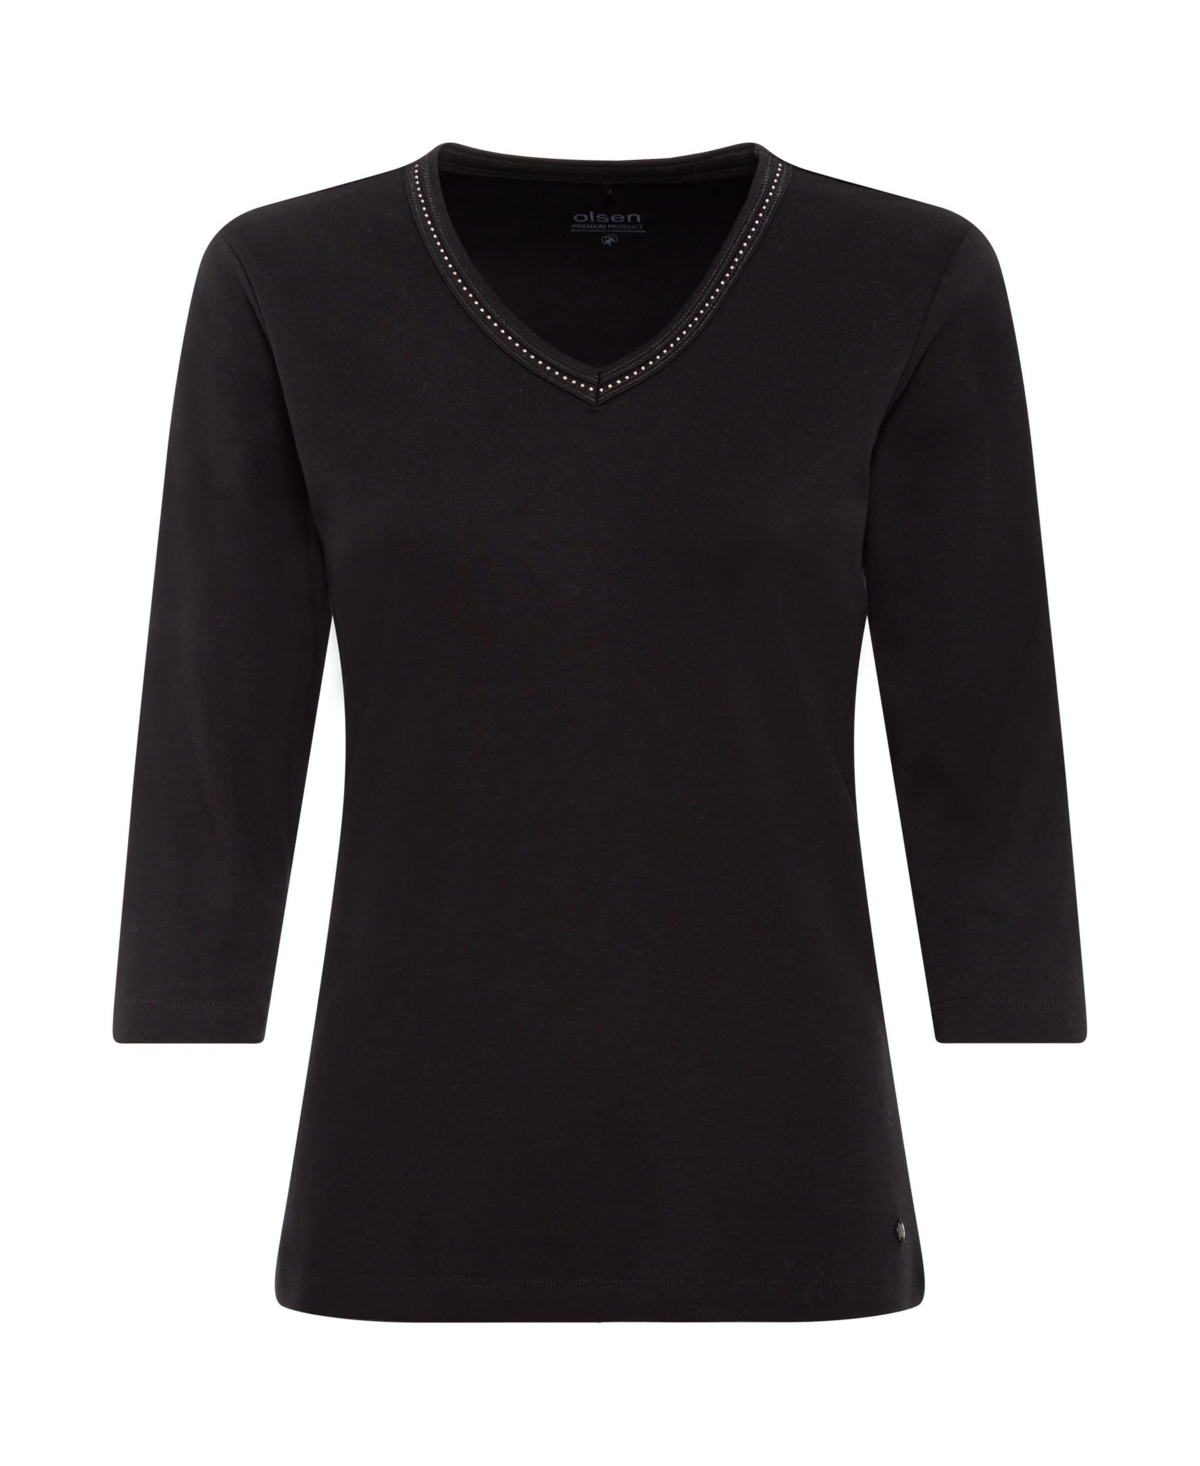 Women's 100% Organic Cotton 3/4 Sleeve Embellished V-Neck T-Shirt - Black